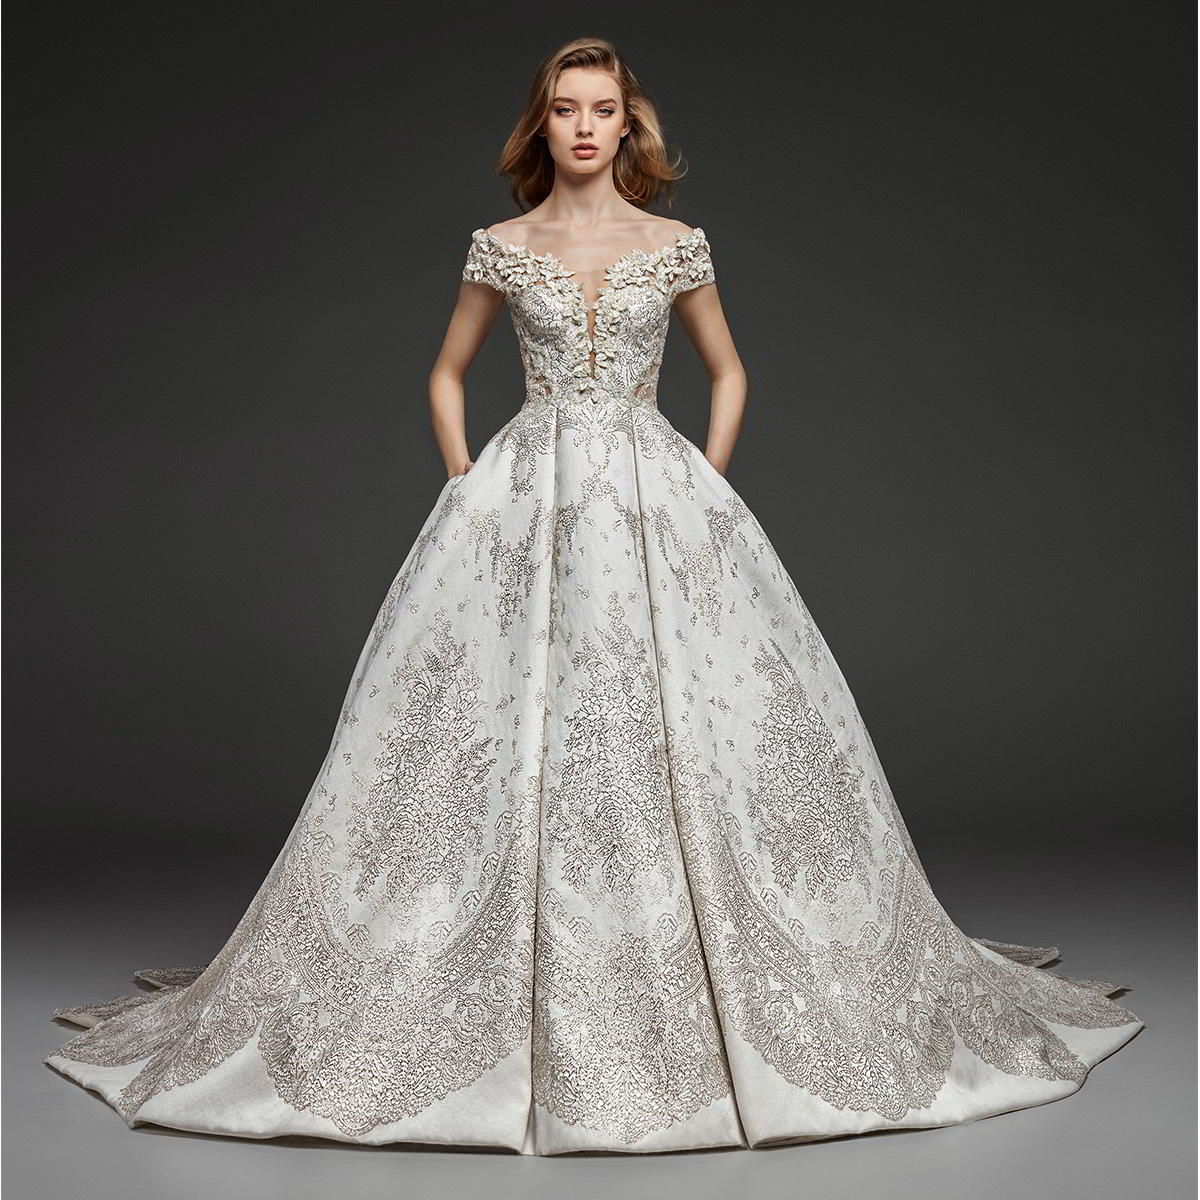 Atelier Pronovias 2019 Wedding Dresses — “In Bloom” Bridal Collection |  Wedding Inspirasi